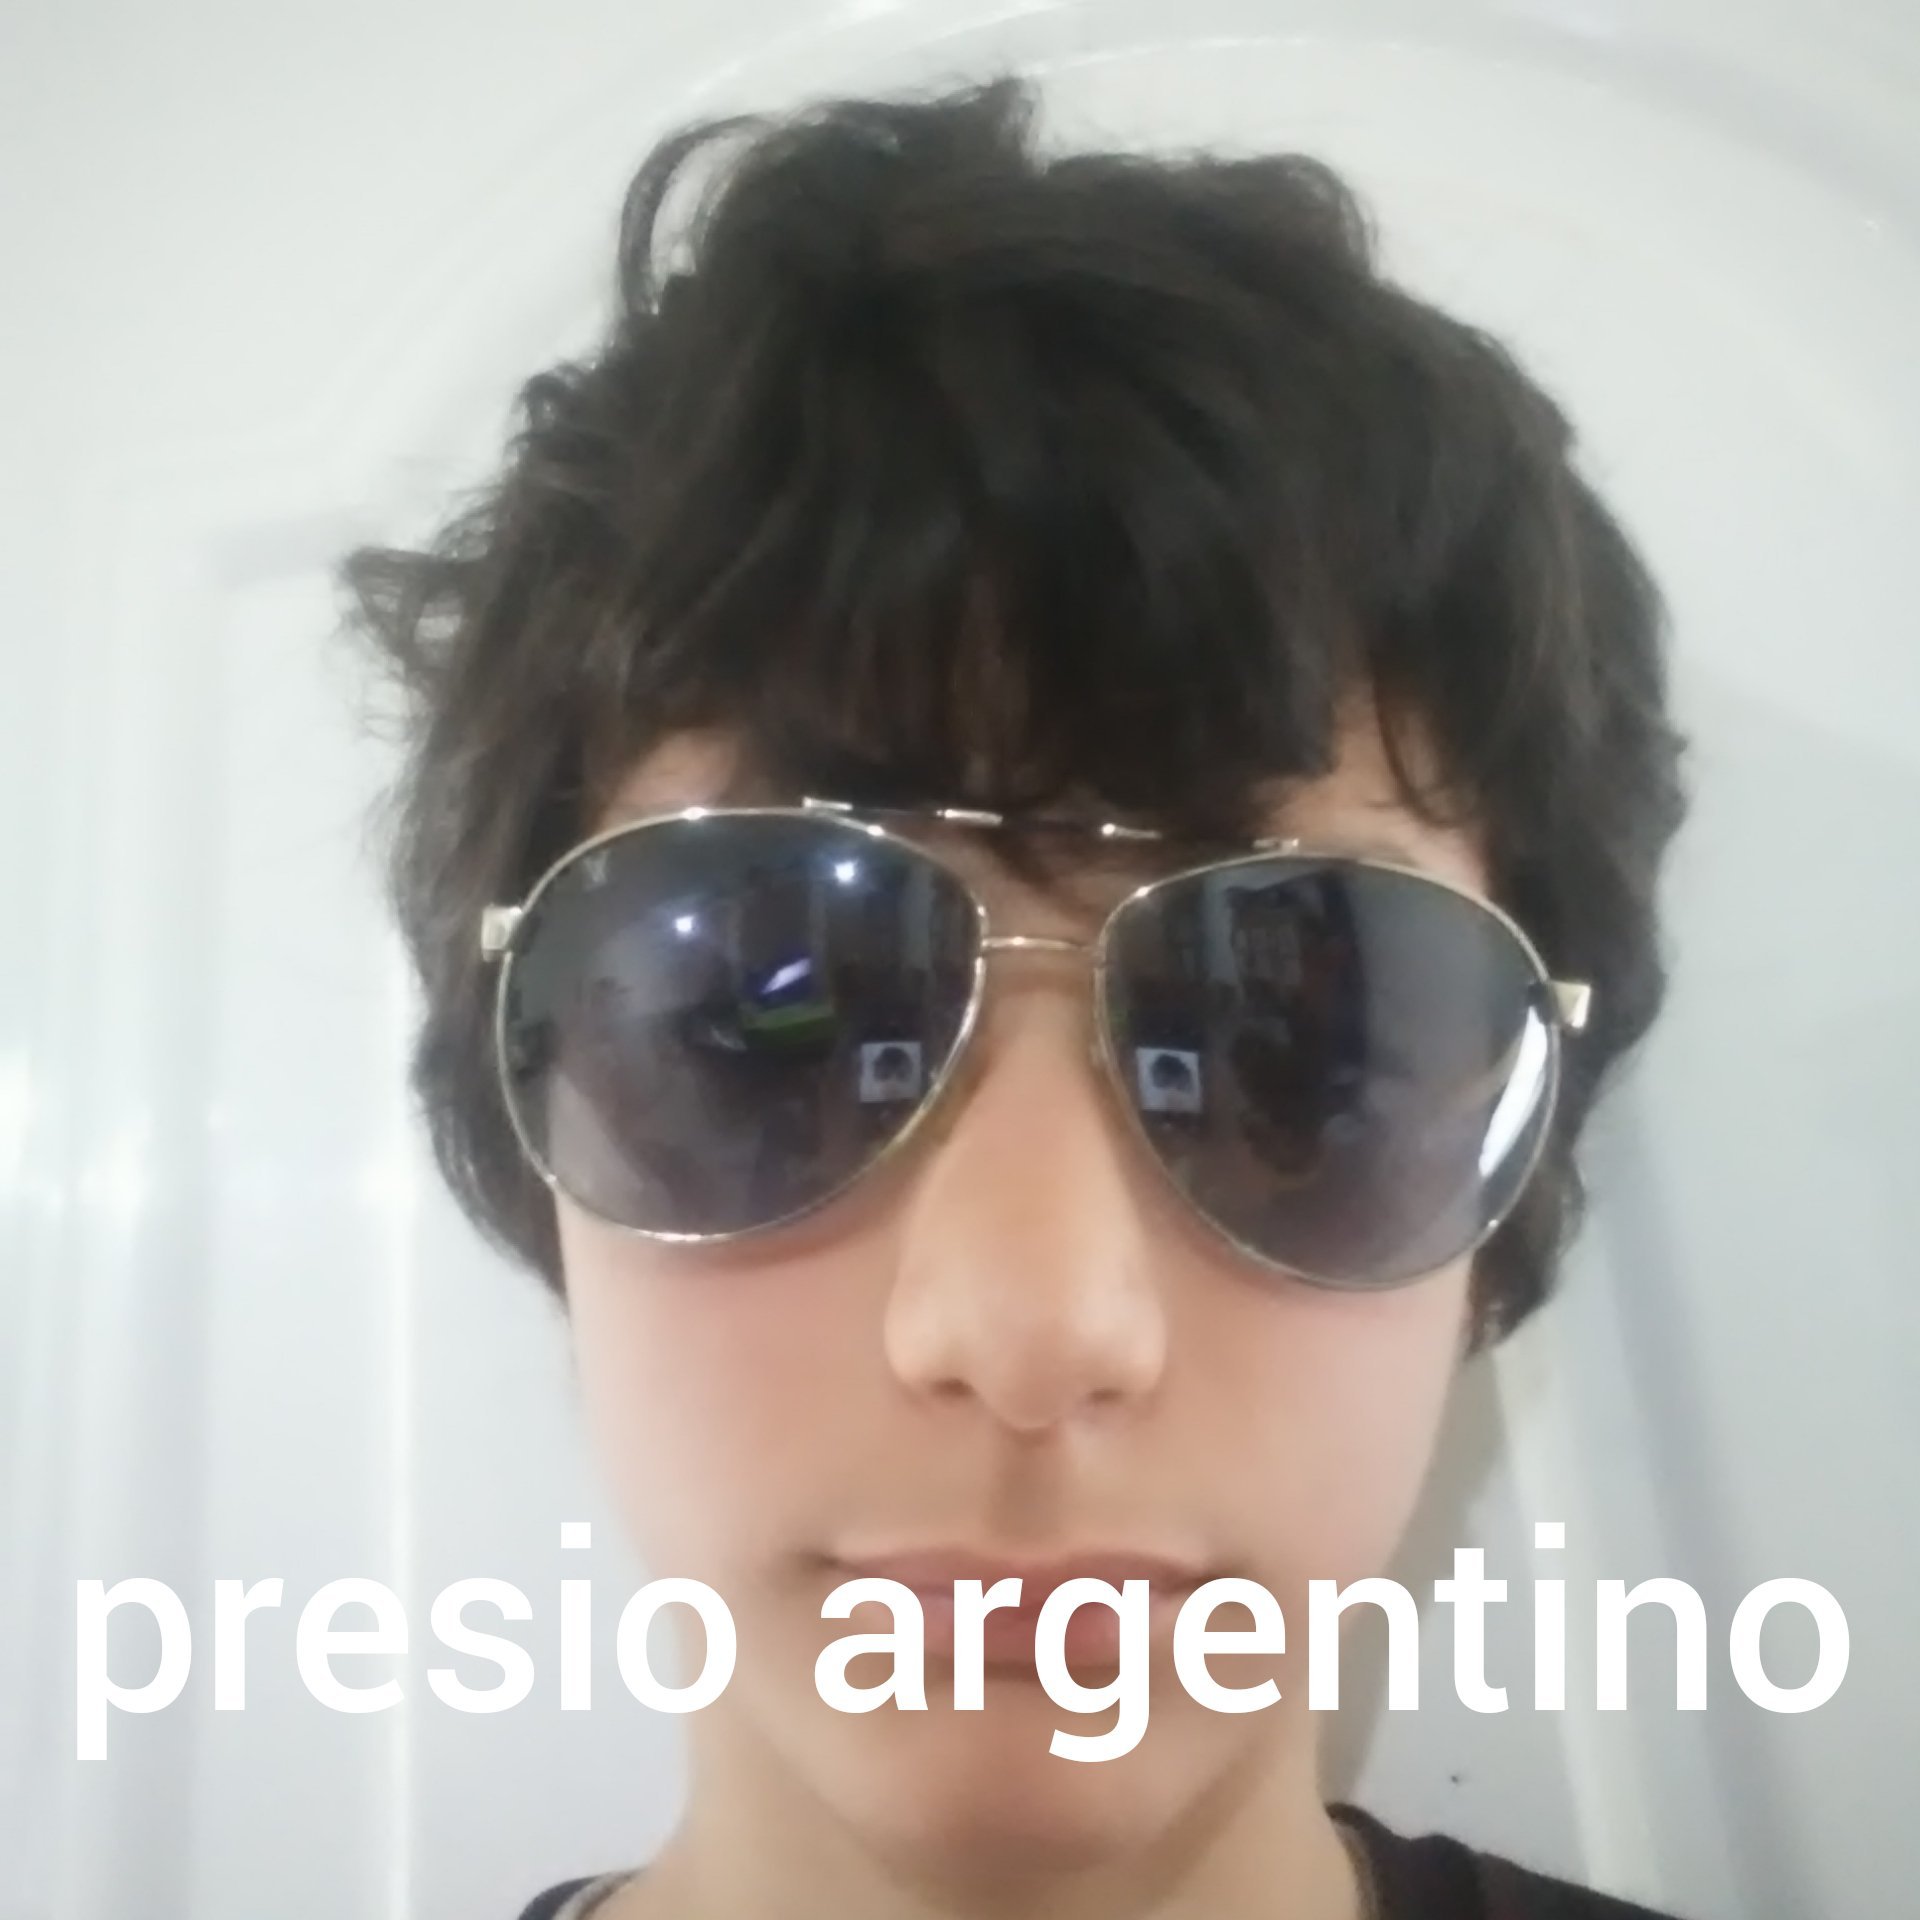 presio argentino - meme